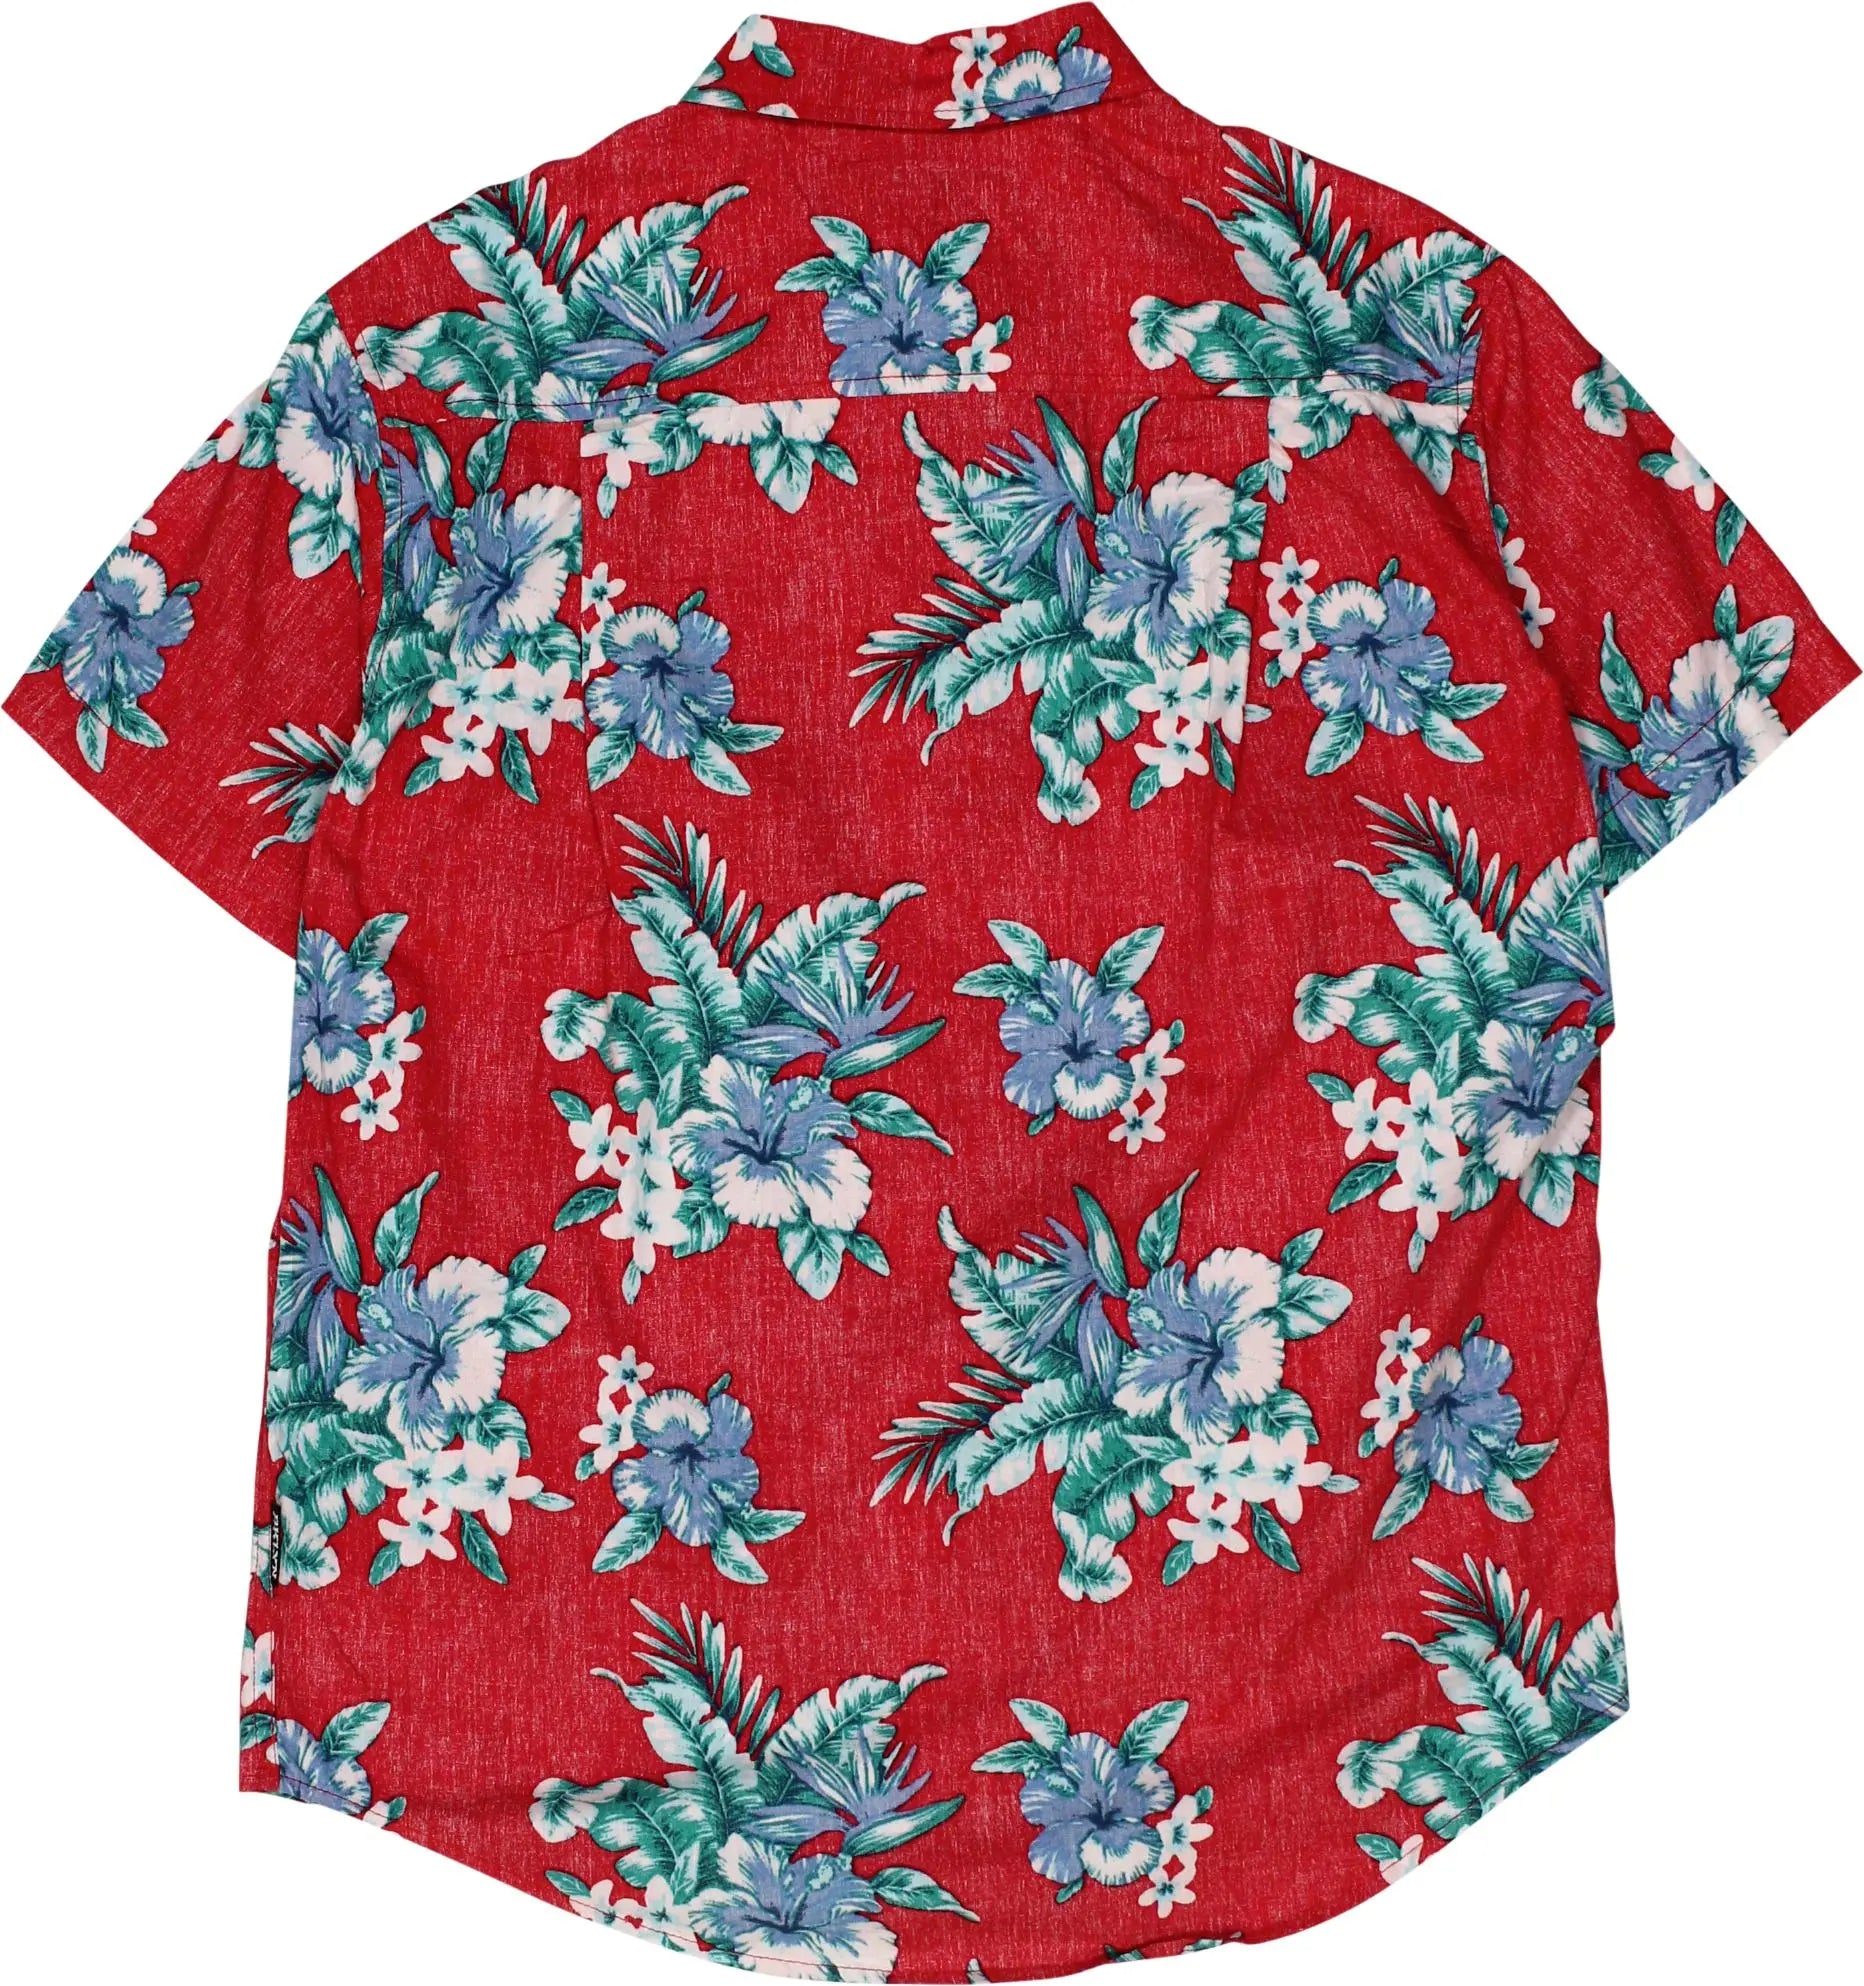 BKLYN Athletics - Hawaiian Shirt- ThriftTale.com - Vintage and second handclothing